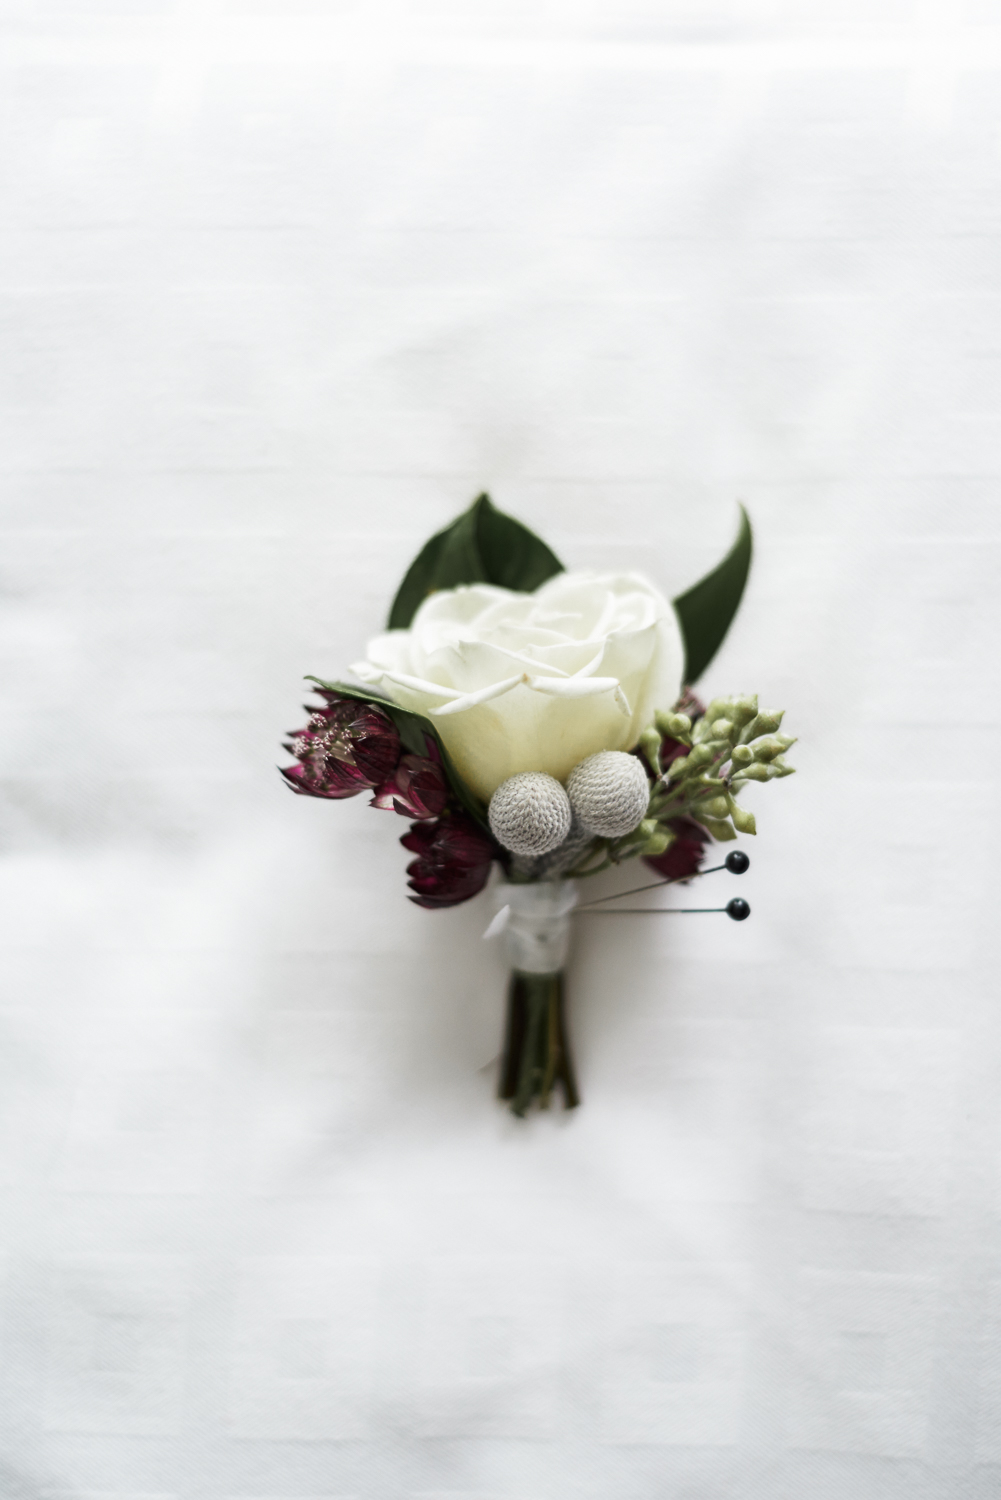 White rose boutonniere